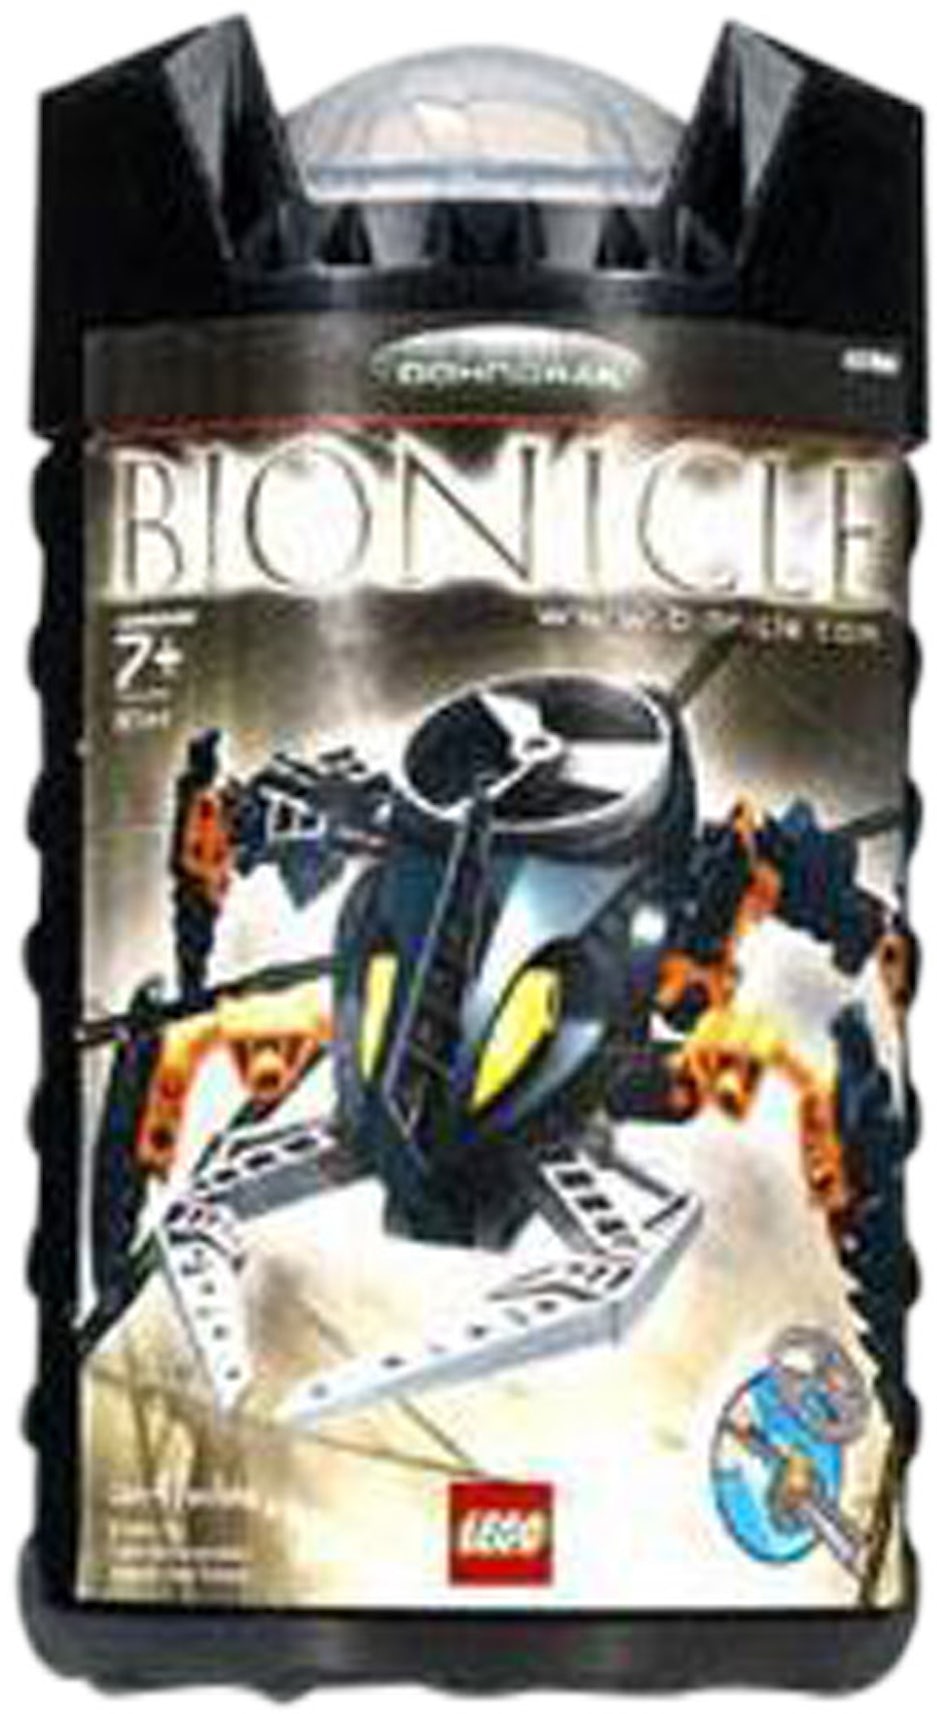 LEGO Bionicle Kazi Set 8722 for Women